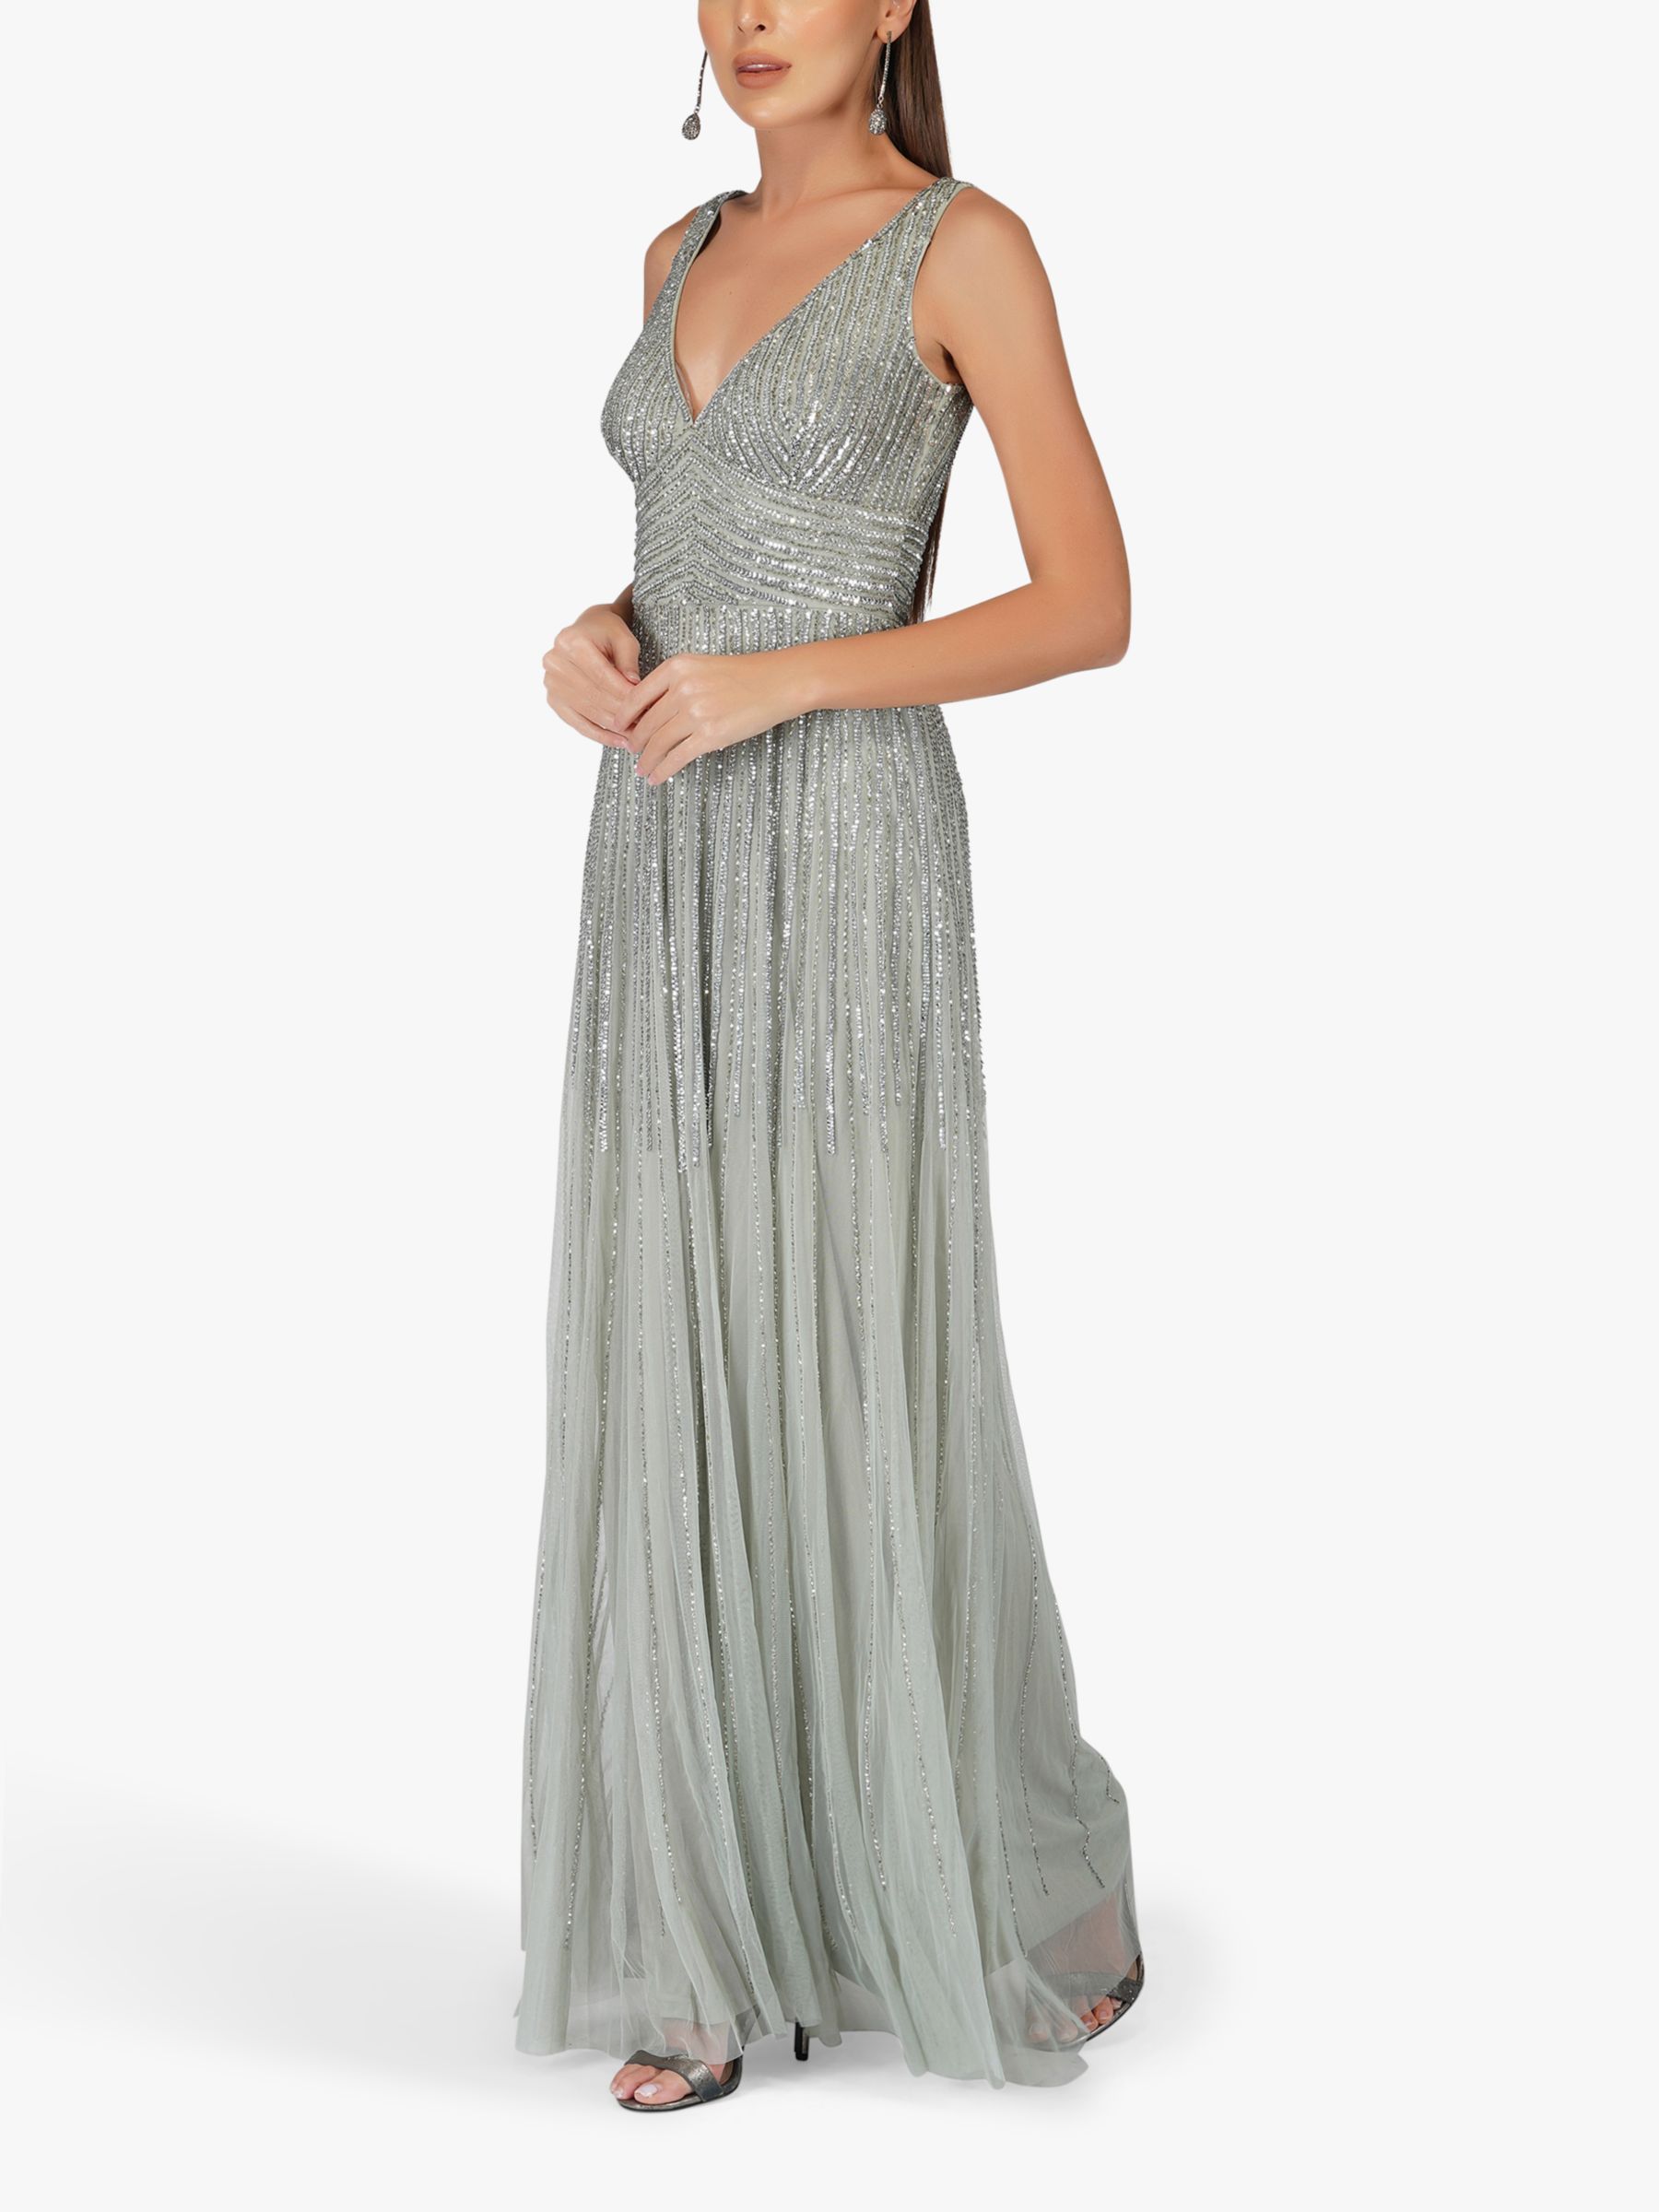 Buy Lace & Beads Lorelai Embellished Maxi Dress Online at johnlewis.com